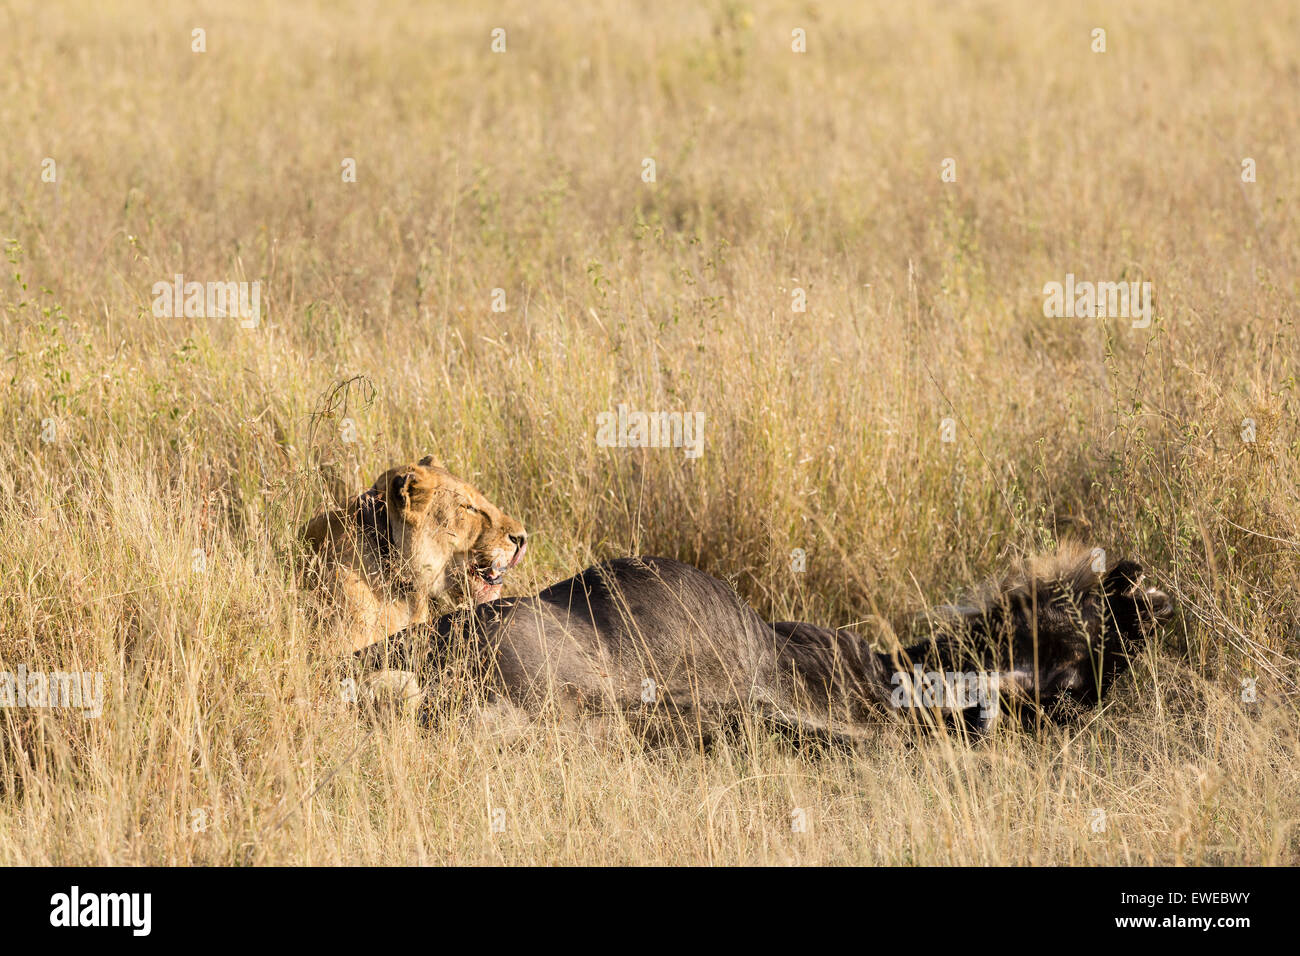 Lion (Panthera leo) feeding on a Wildebeest (Connochaetes taurinus) in the Serengeti Tanzania Stock Photo